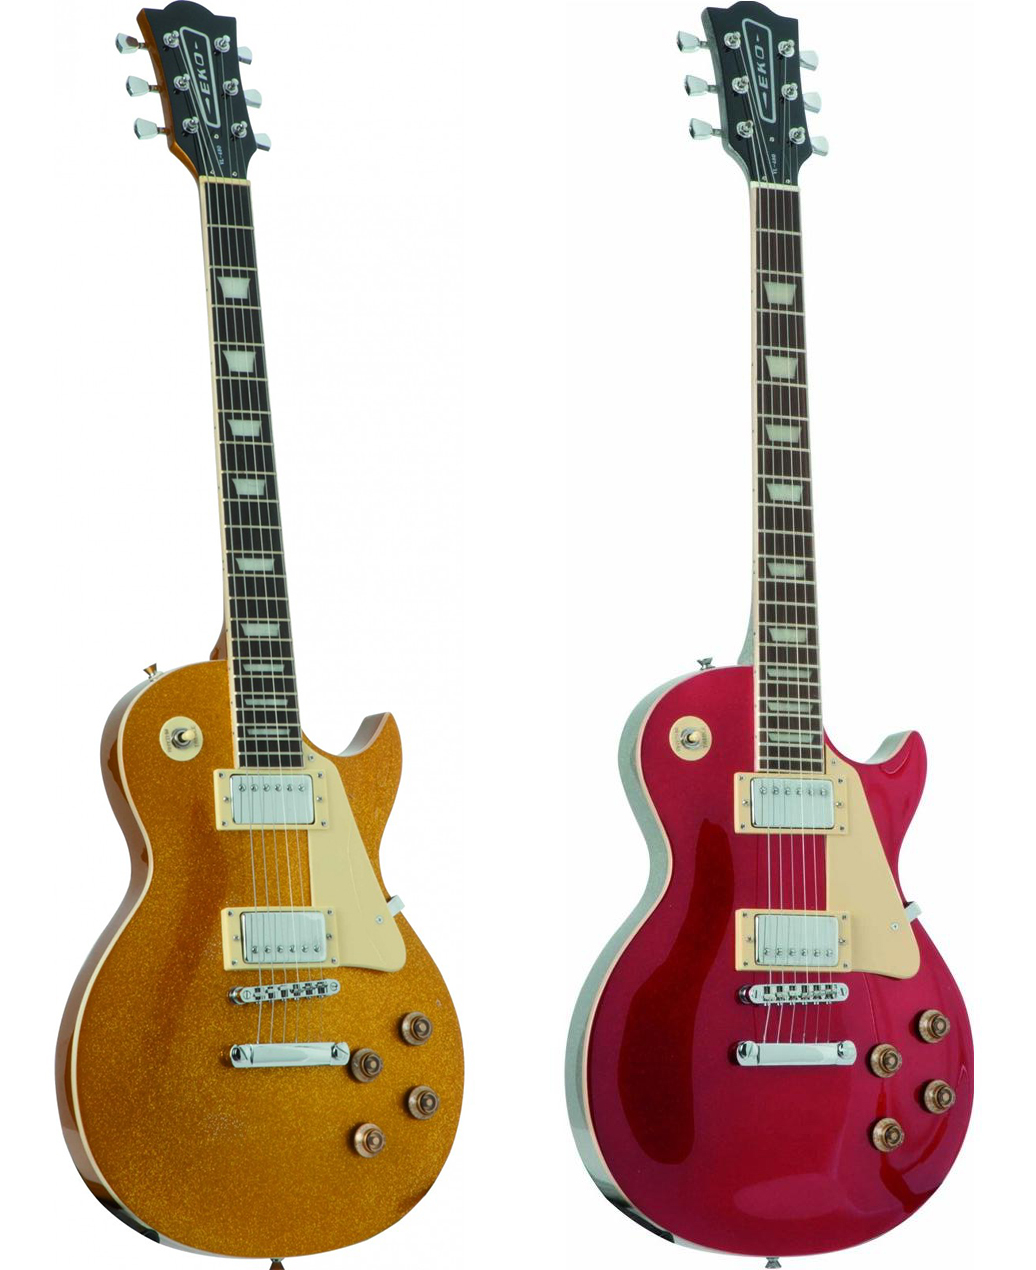 Electric guitar Eko VL-480: Gold Sparkle or Red Sparkle for 6912 UAH